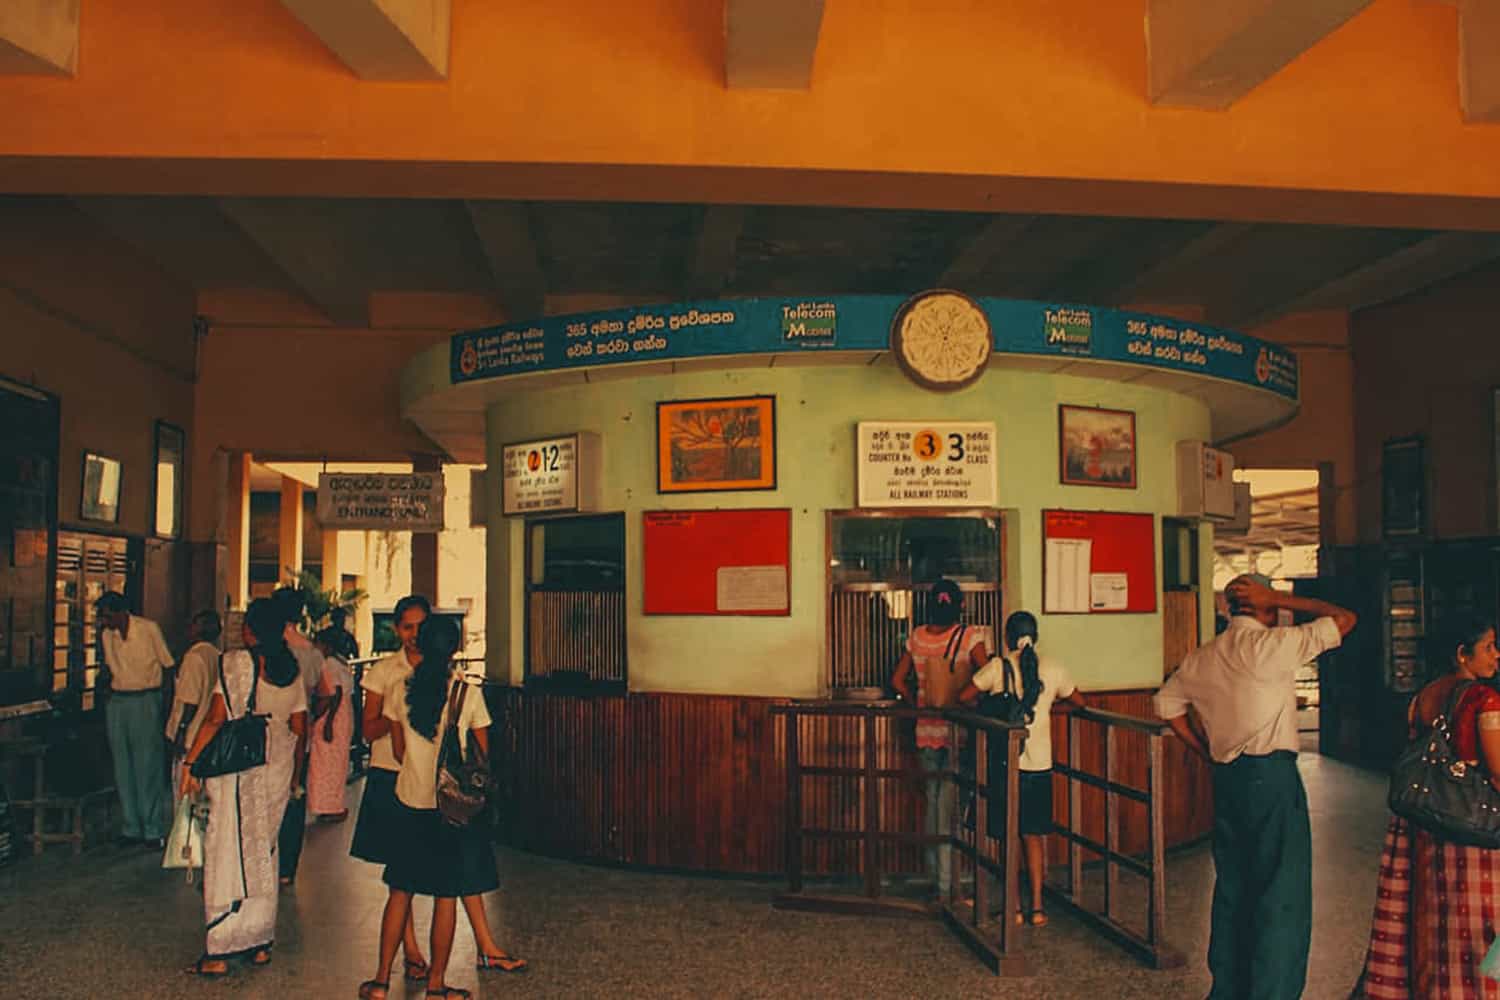 How to book train tickets in Sri Lanka